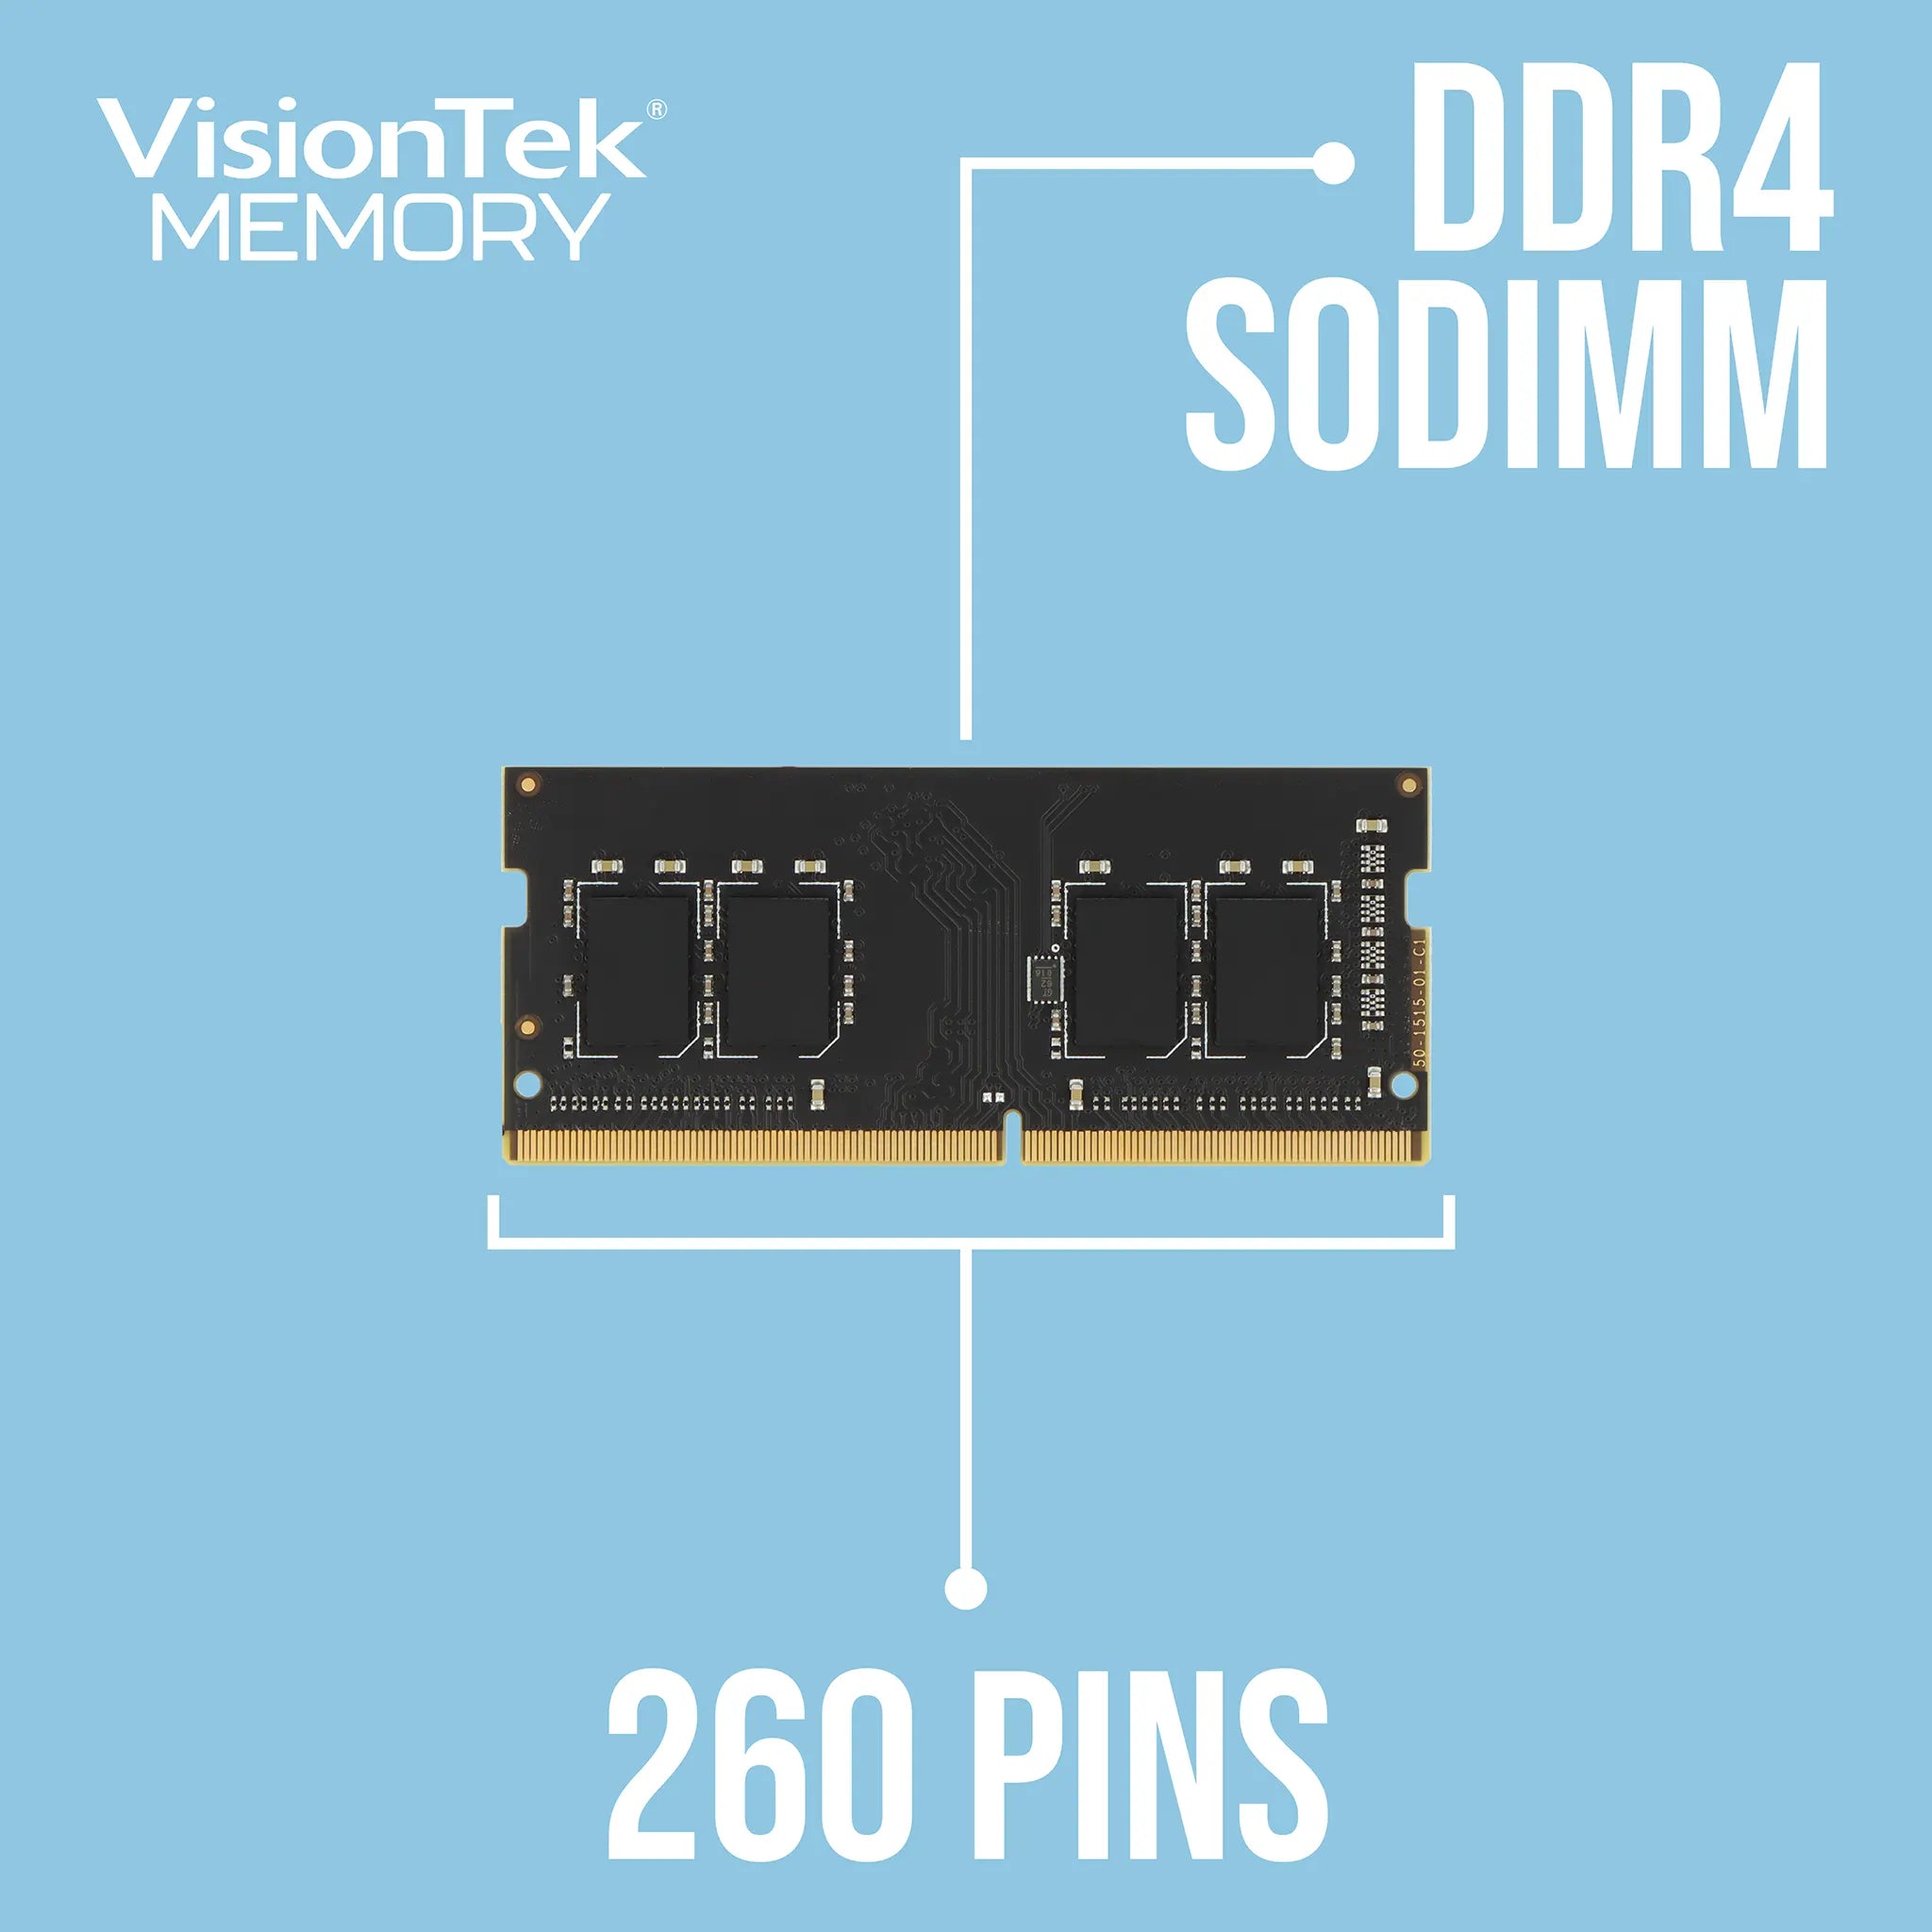 DDR4 - 2400MHz - CL17 - SODIMM - Laptop –